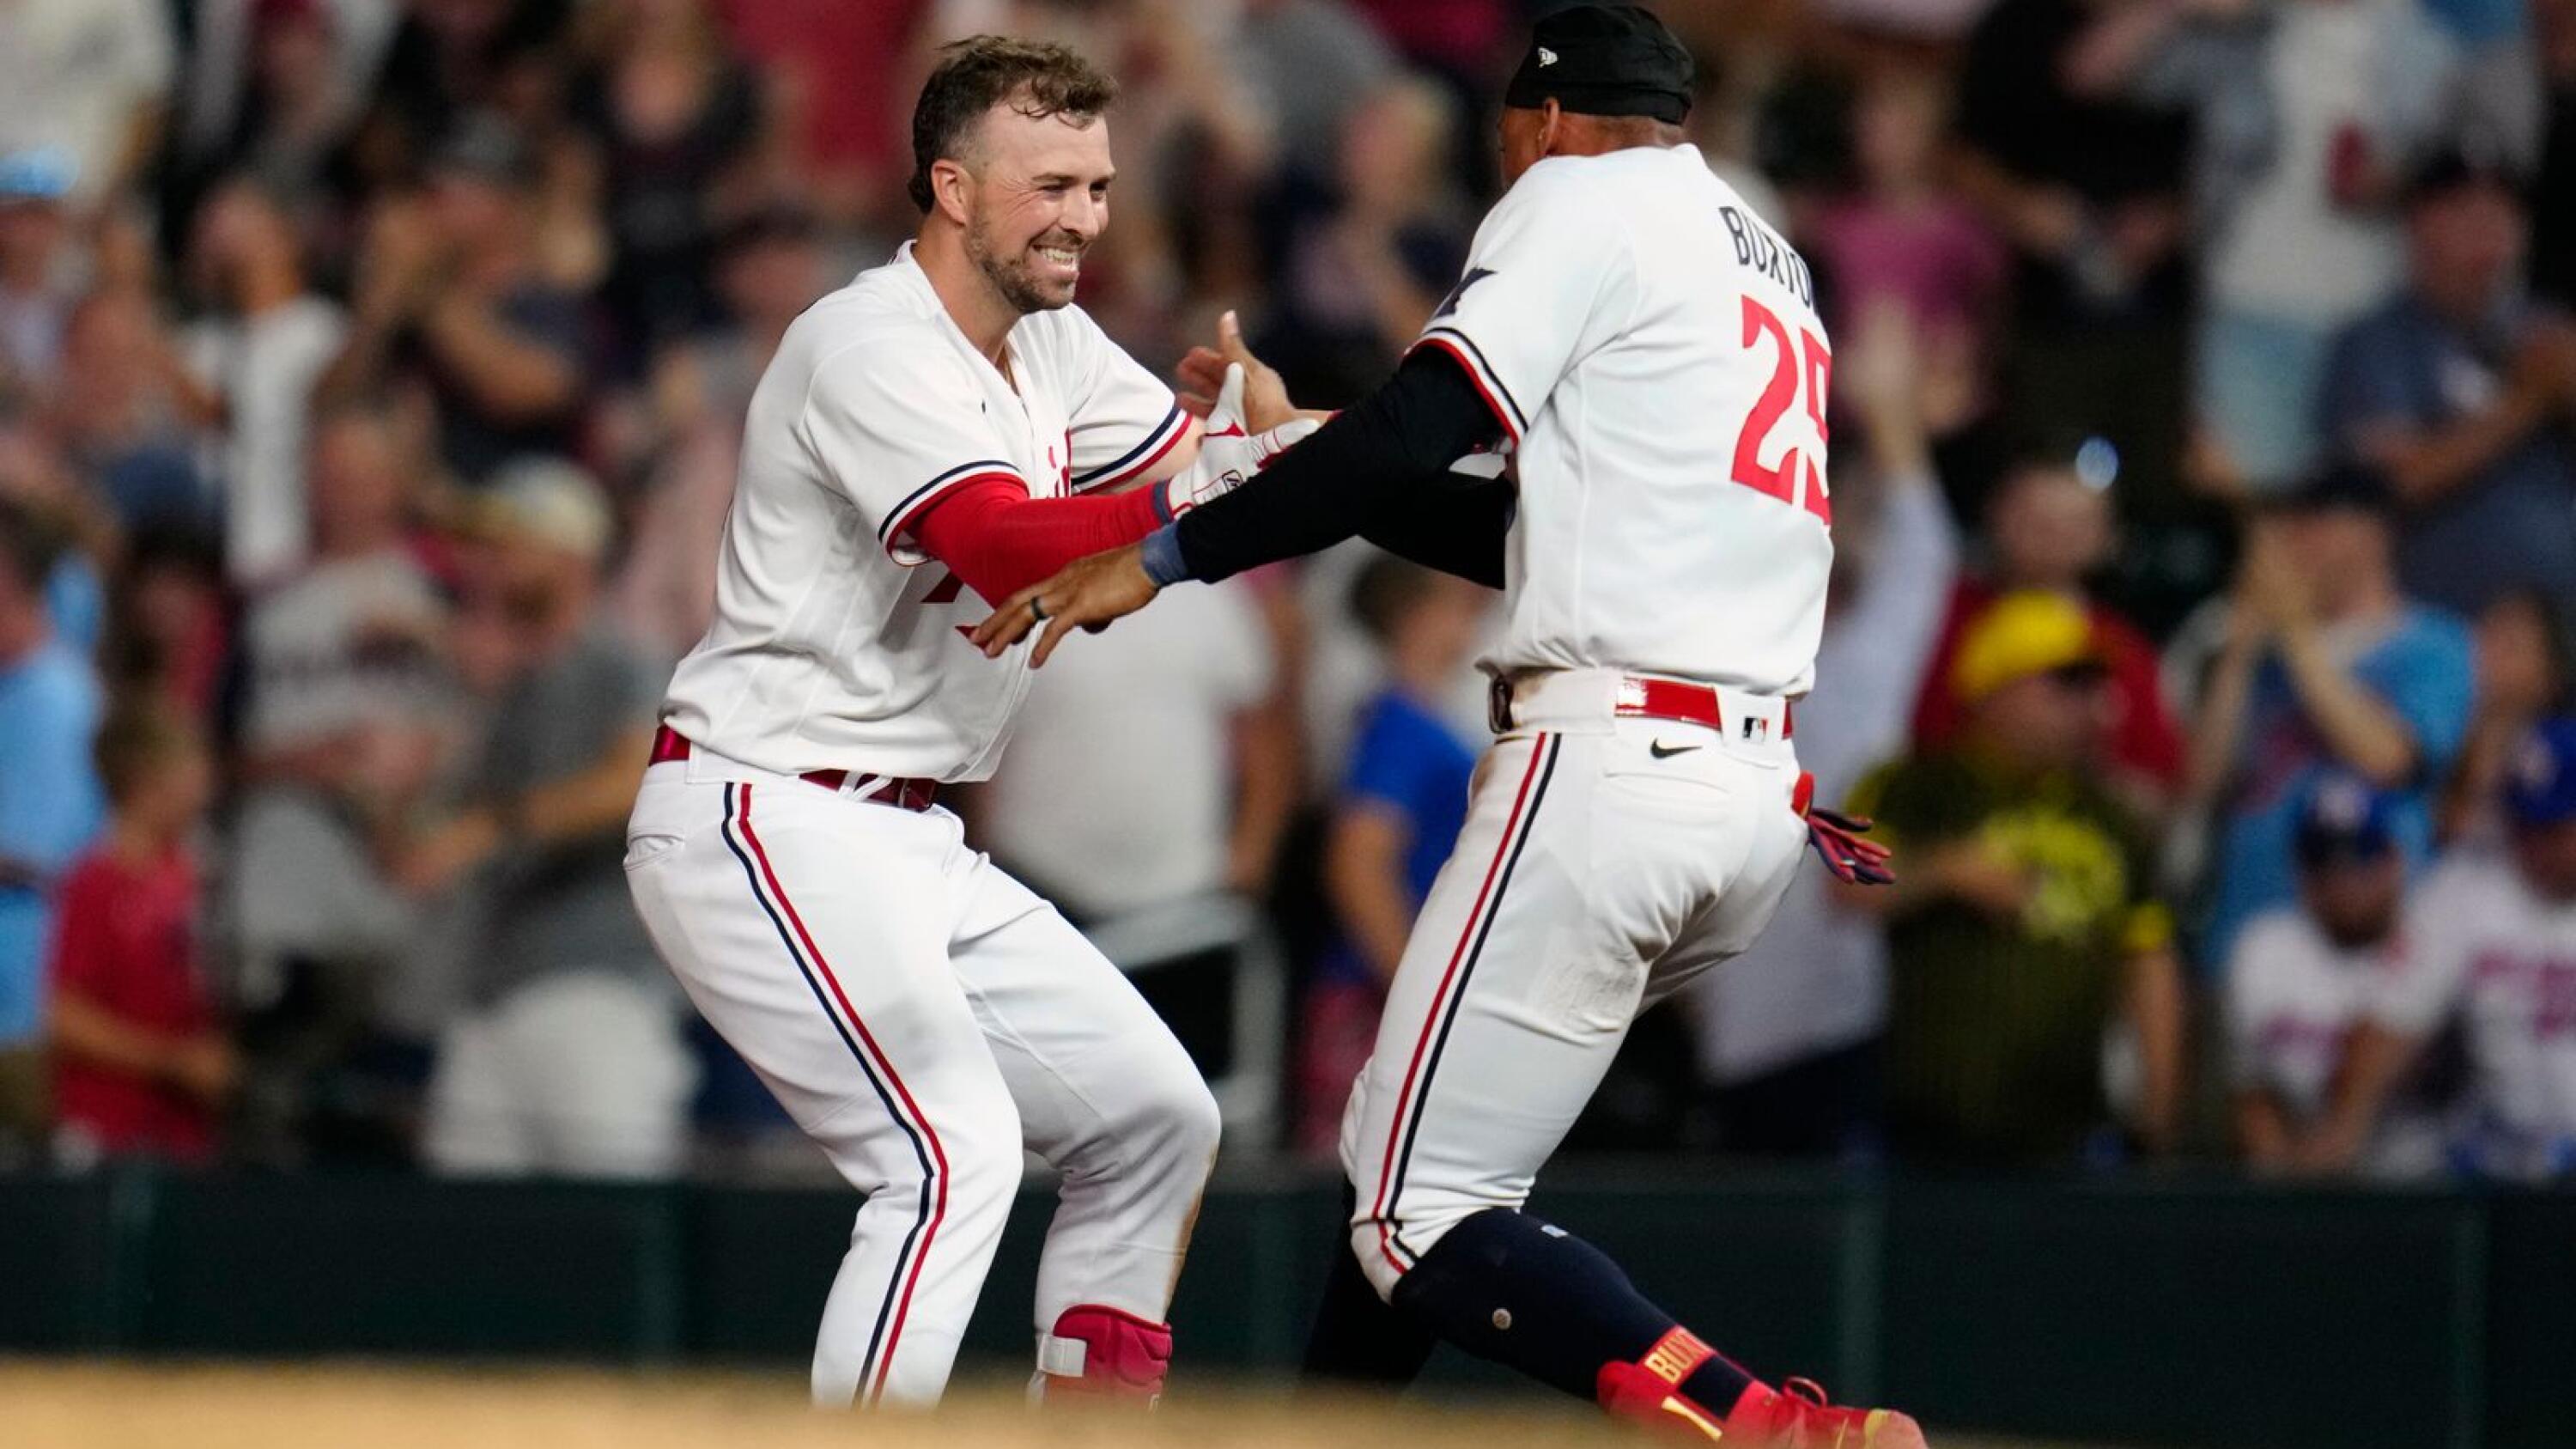 Twins defeat Astros as Kyle Farmer, Byron Buxton homer; pitchers